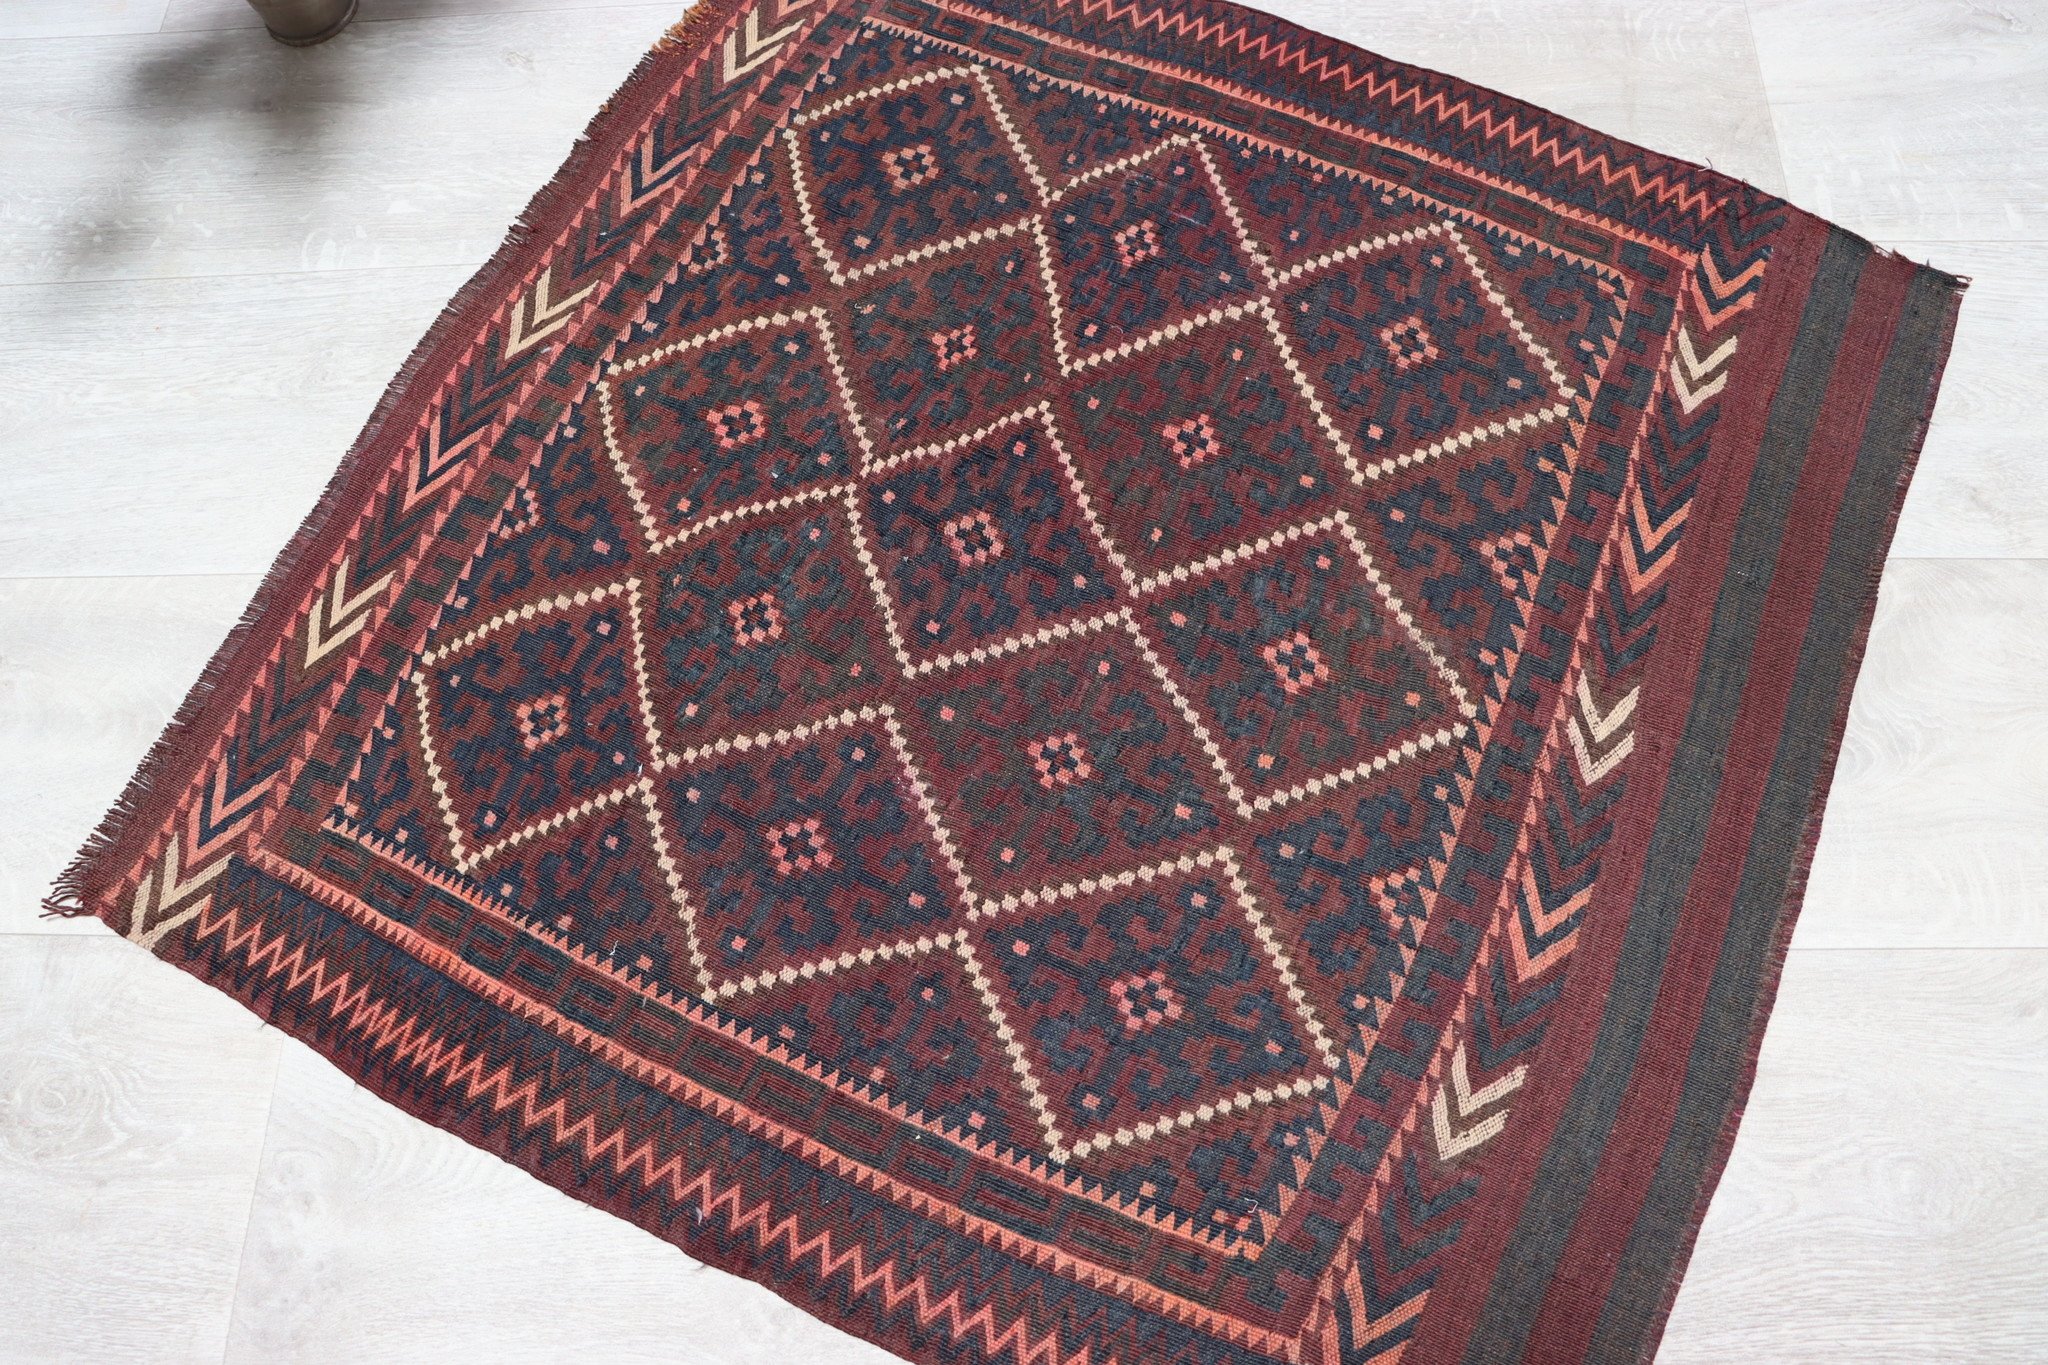 75x75 antique tribal Nomadic Baluch nomads belotsch sumakh Balouch Vintage Kilim Tataren rug from Afghanistan No.29